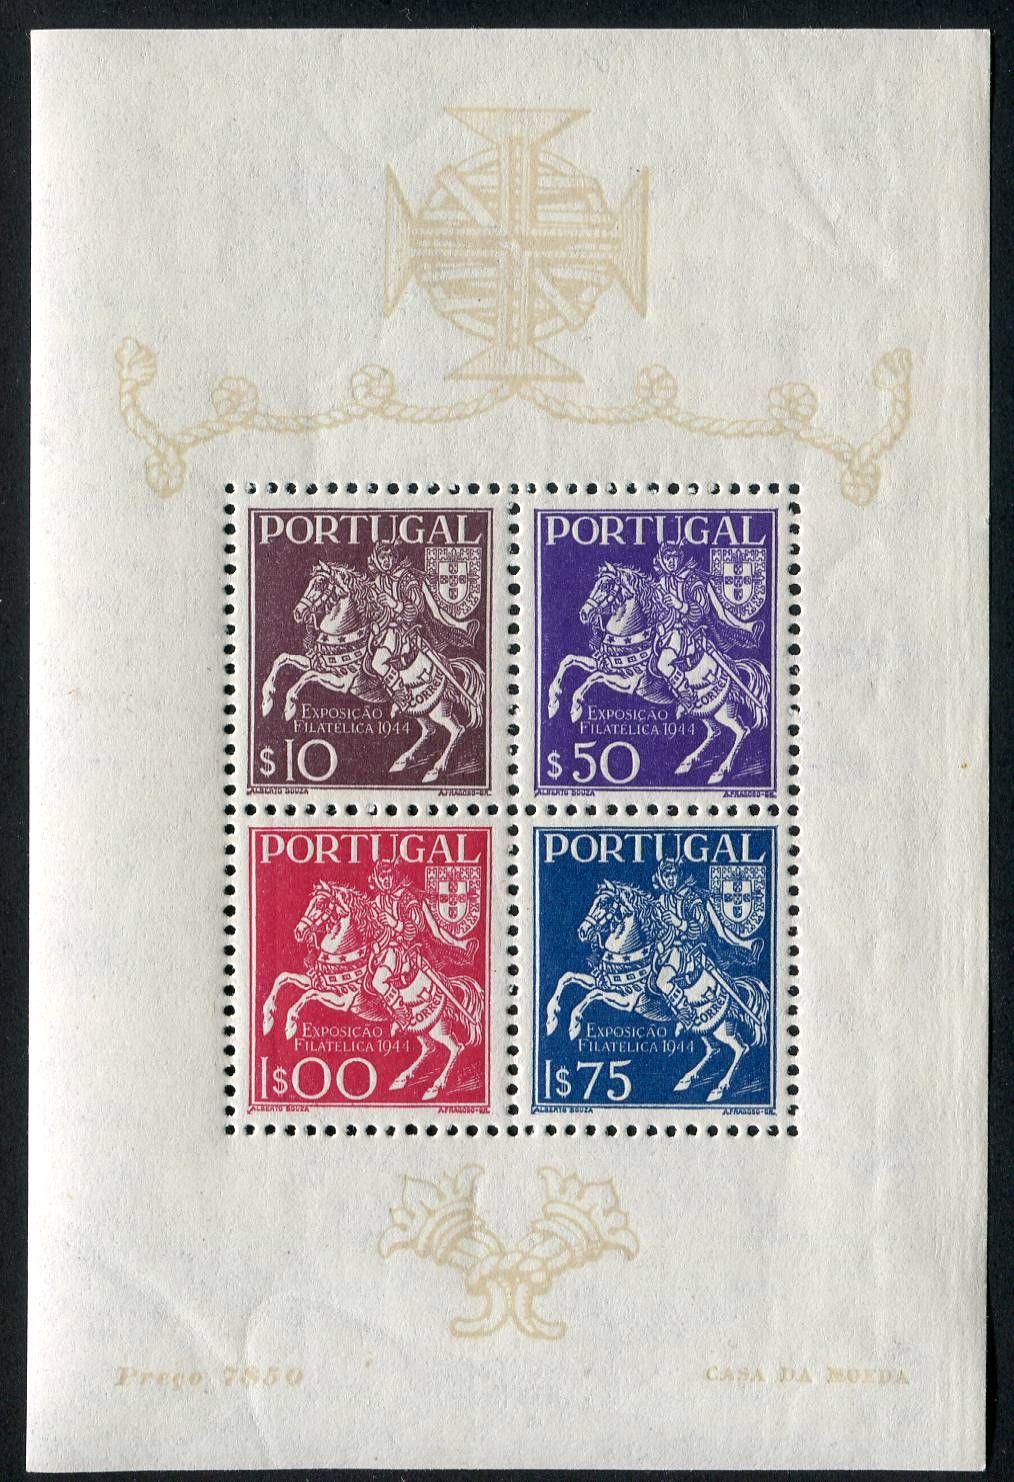 (1944) MiNr. 665 - 668 ** - Portugalsko - BLOCK 5 - Výstava známek Lisabon | www.tgw.cz